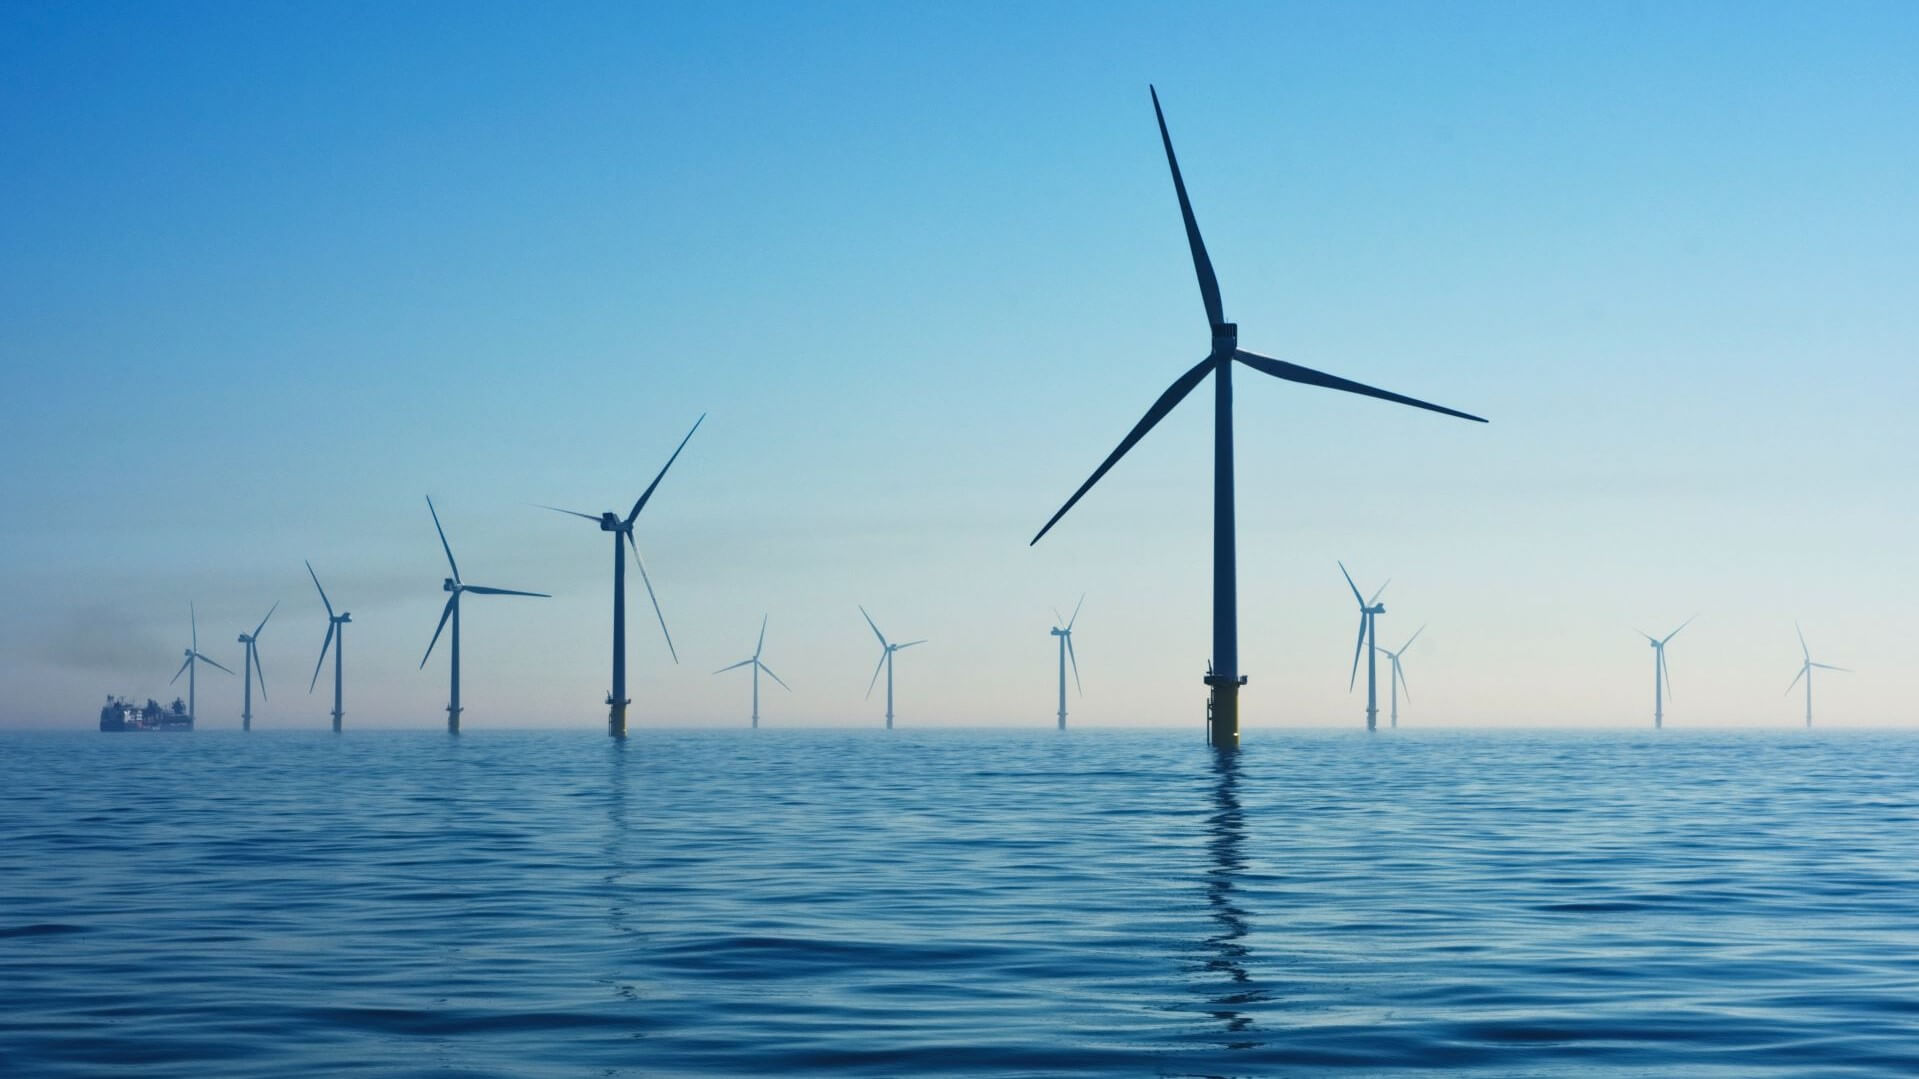 Floating offshore wind farm in blue sea set against blue sky